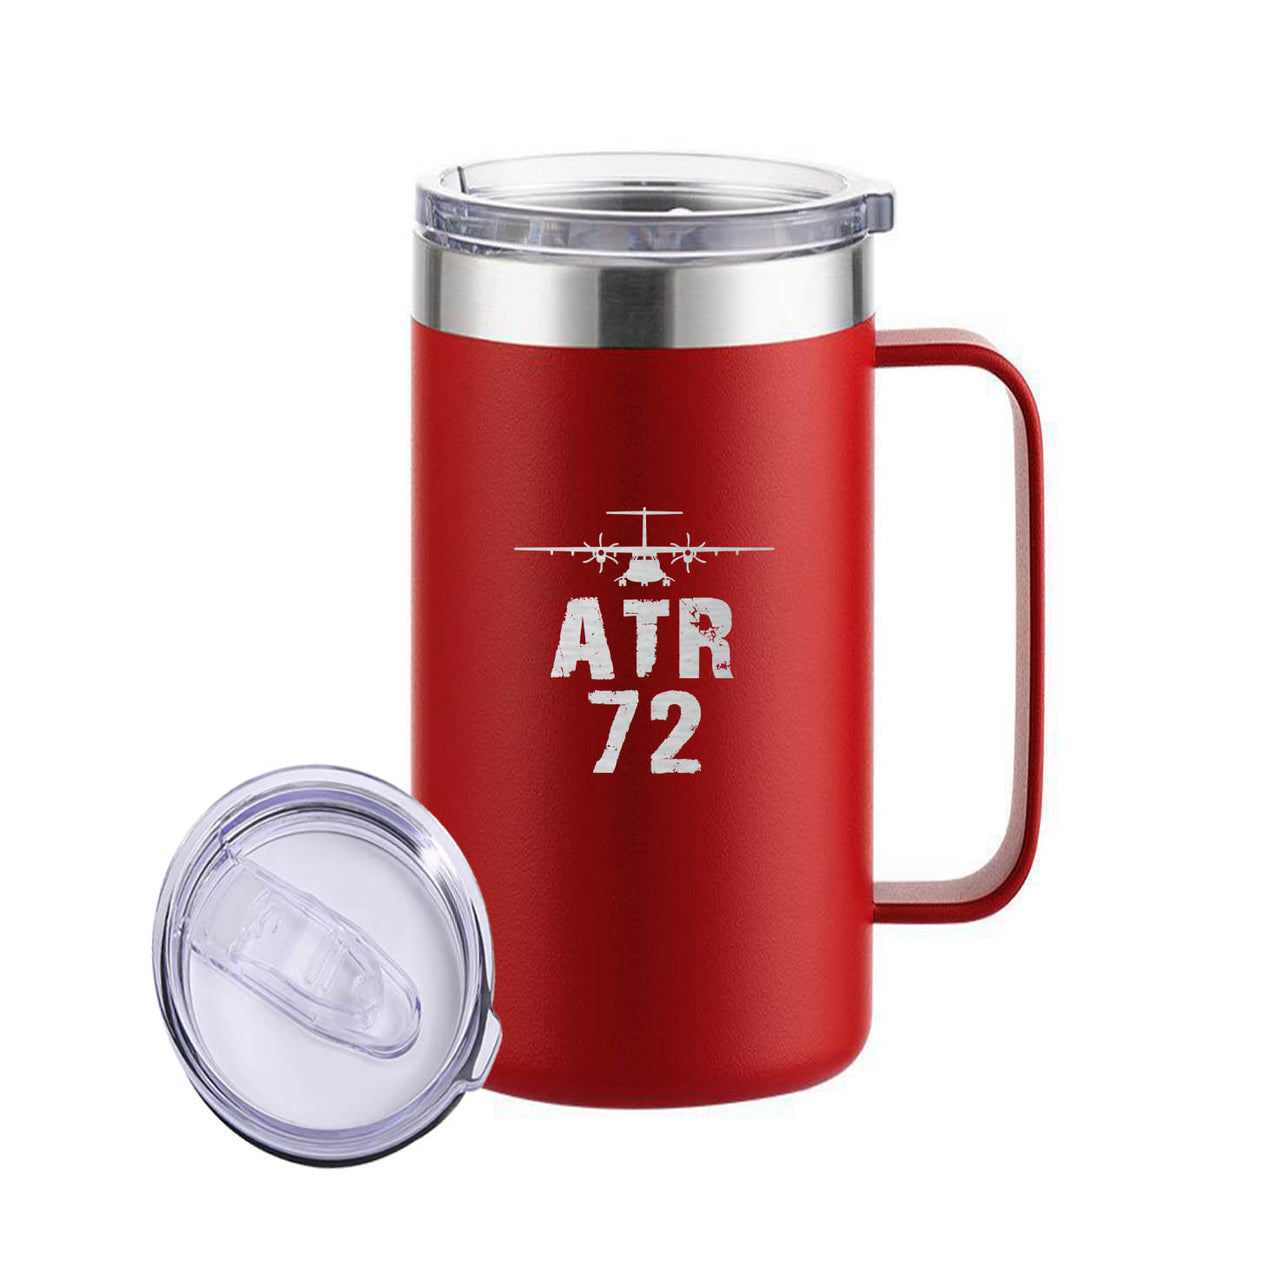 ATR-72 & Plane Designed Stainless Steel Beer Mugs